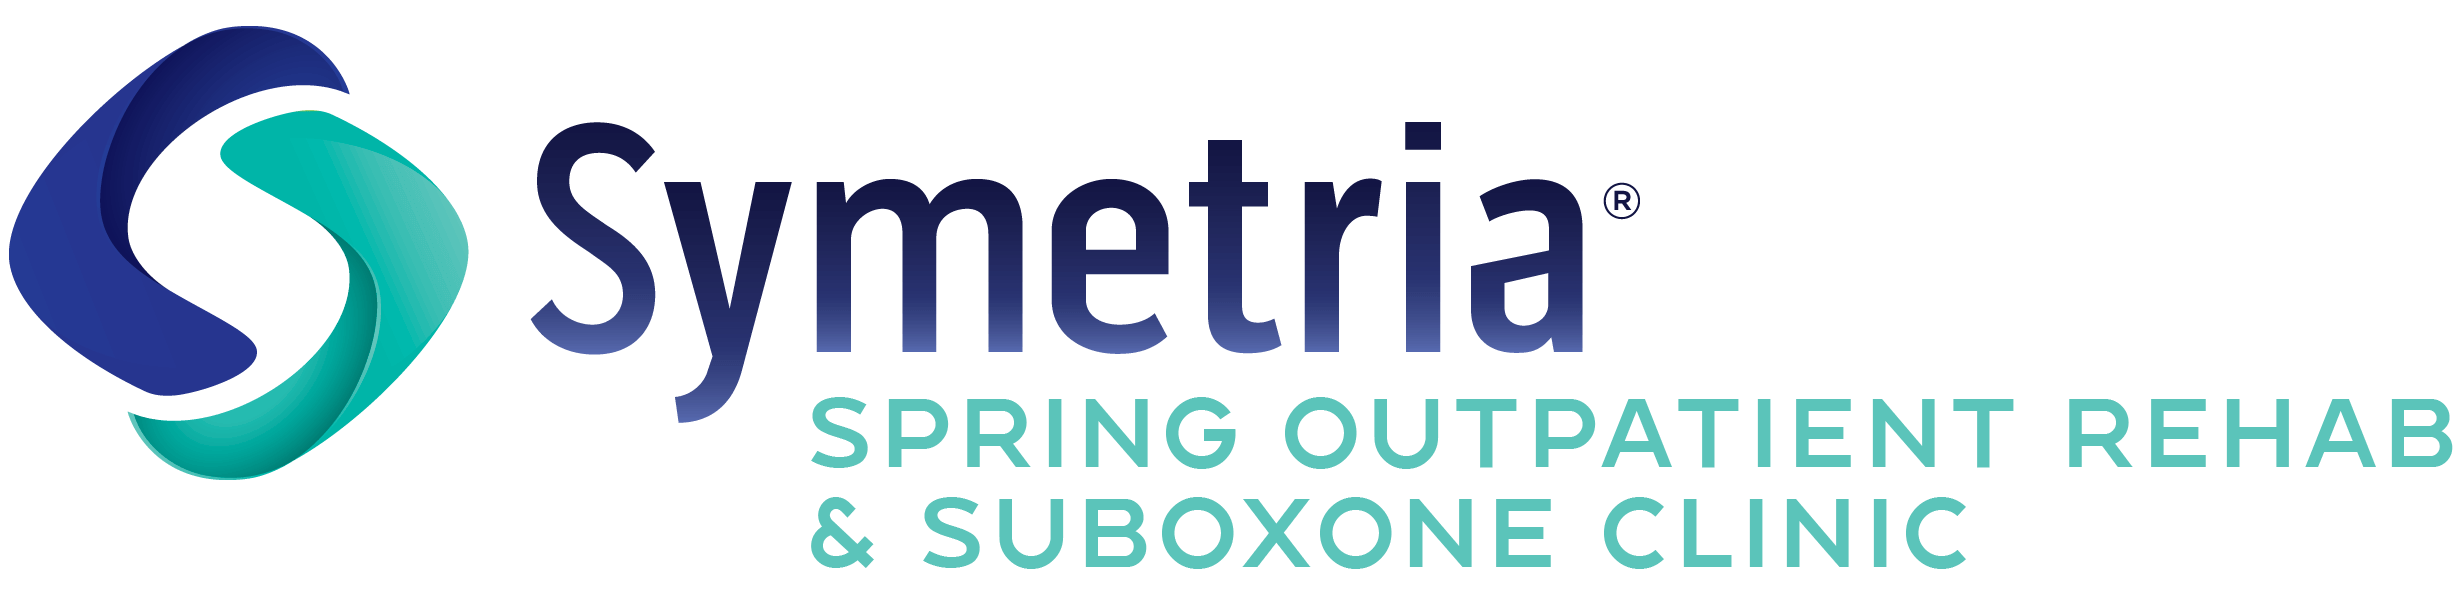 Symetria — Spring Outpatient Rehab & Suboxone Clinic